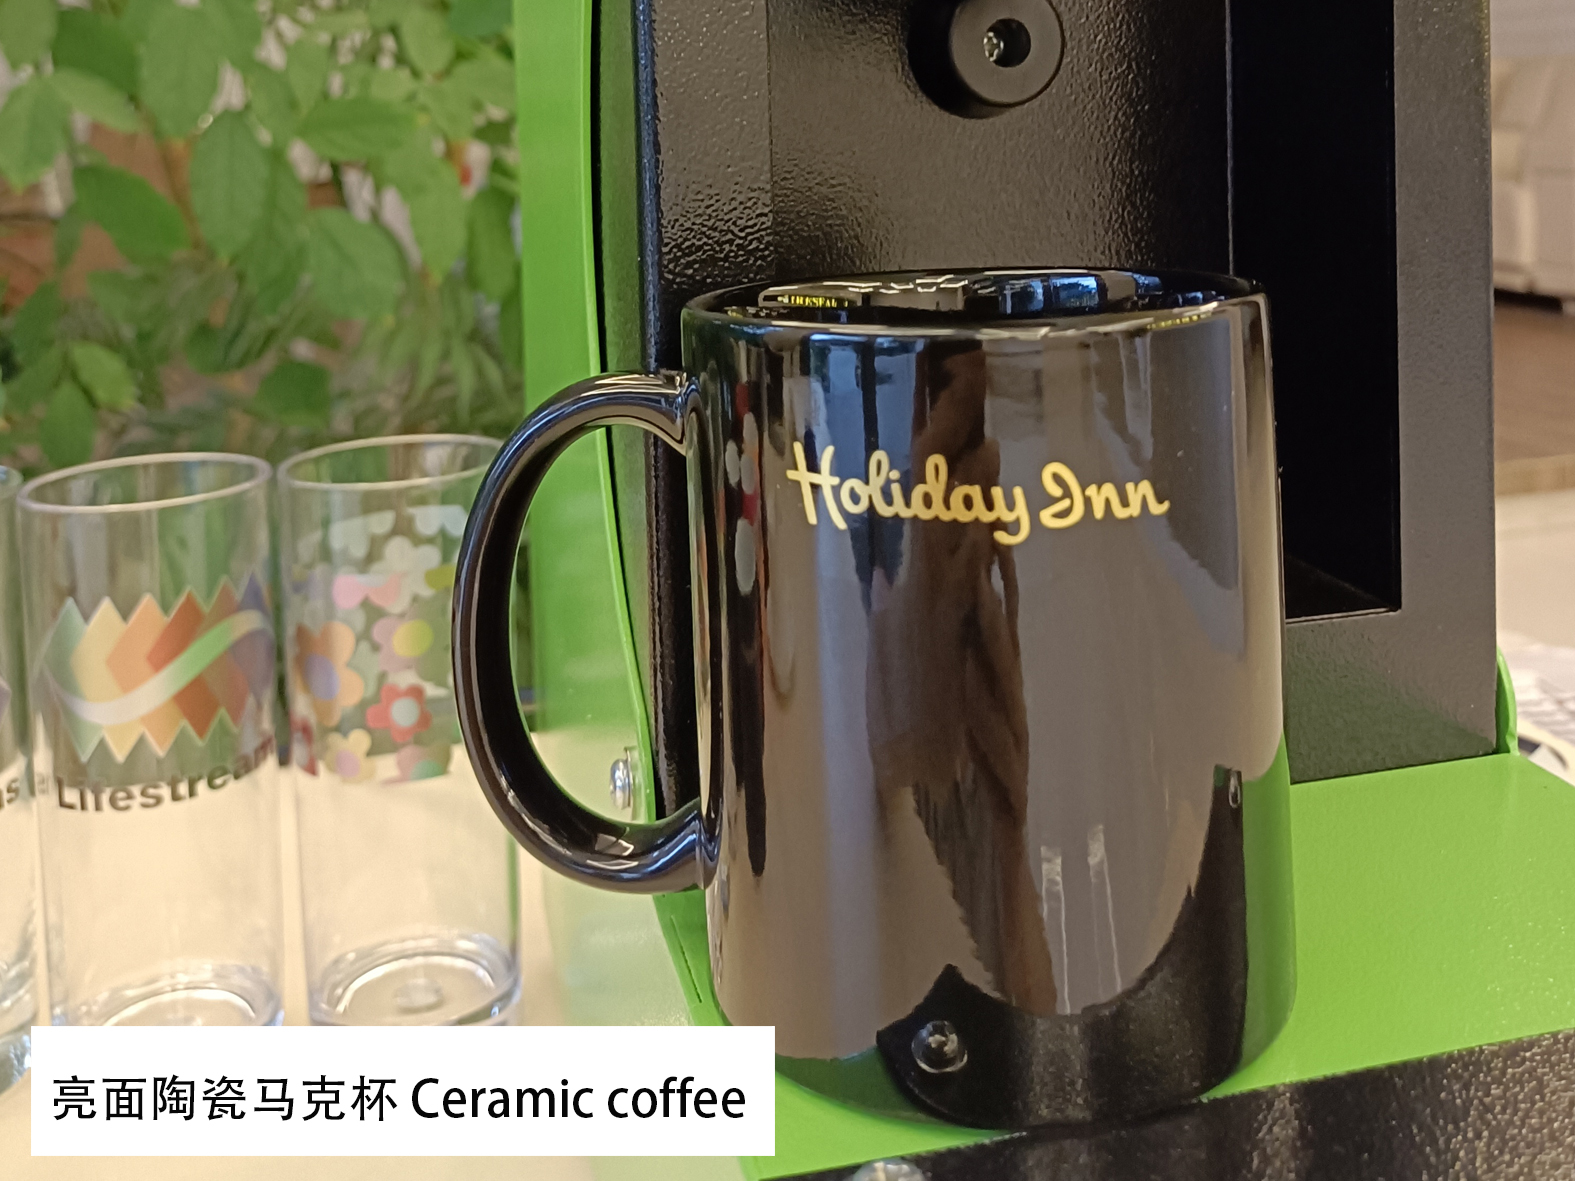 Brilliant Golden cuttable Heat Transfer Decals Foil (HSF-GD811) Para sa Logo ng Ceramic Coffee ng Holiday Inn